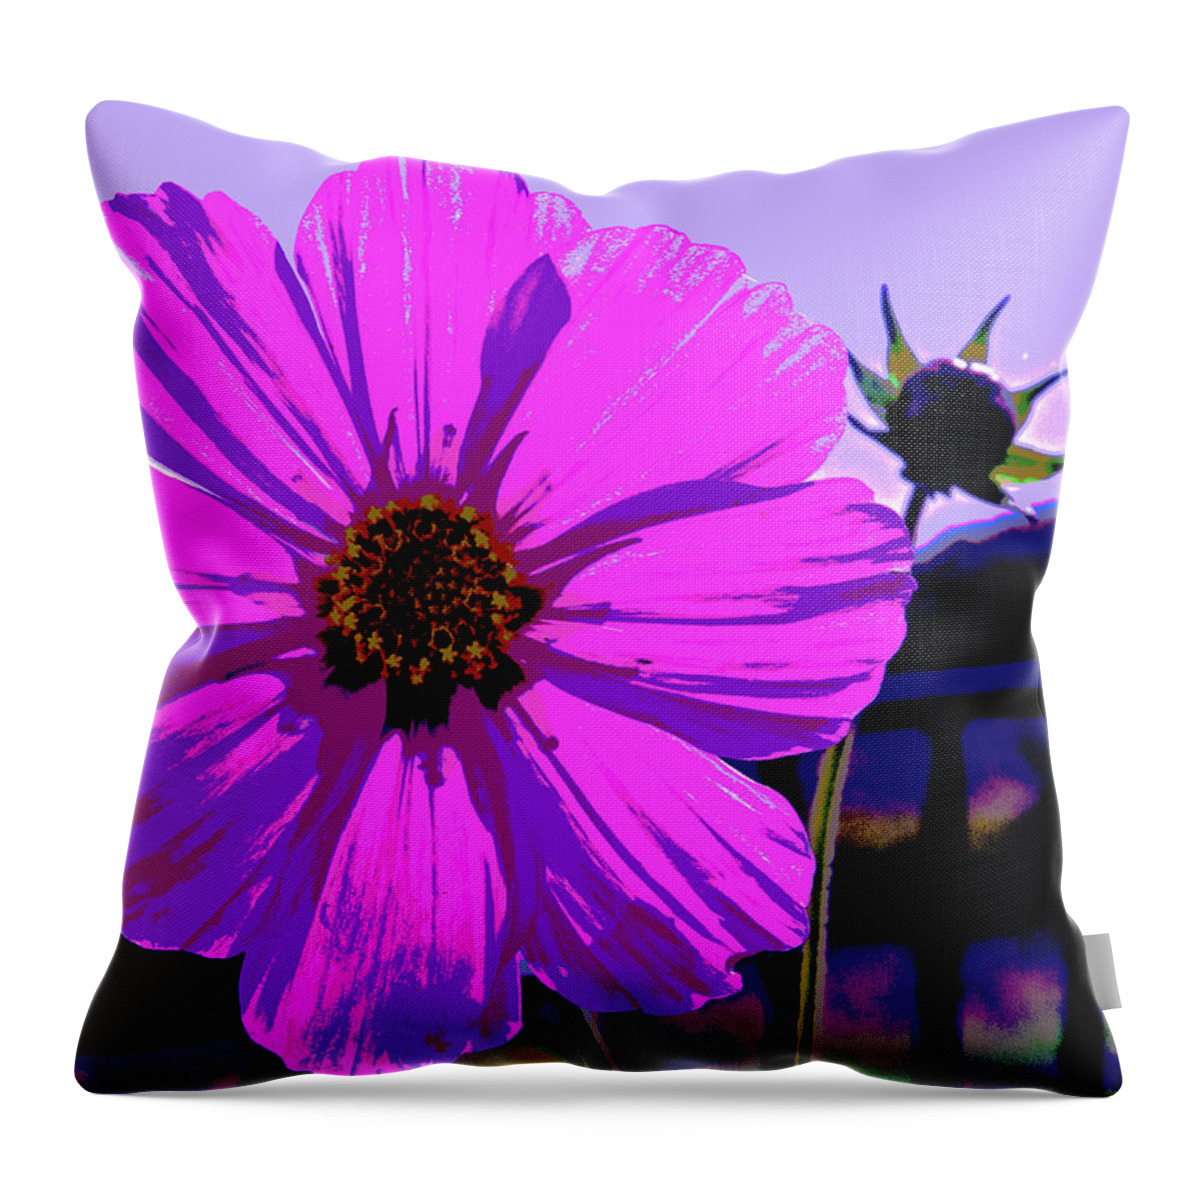 Art Throw Pillow featuring the digital art Flower And Bud by David Desautel